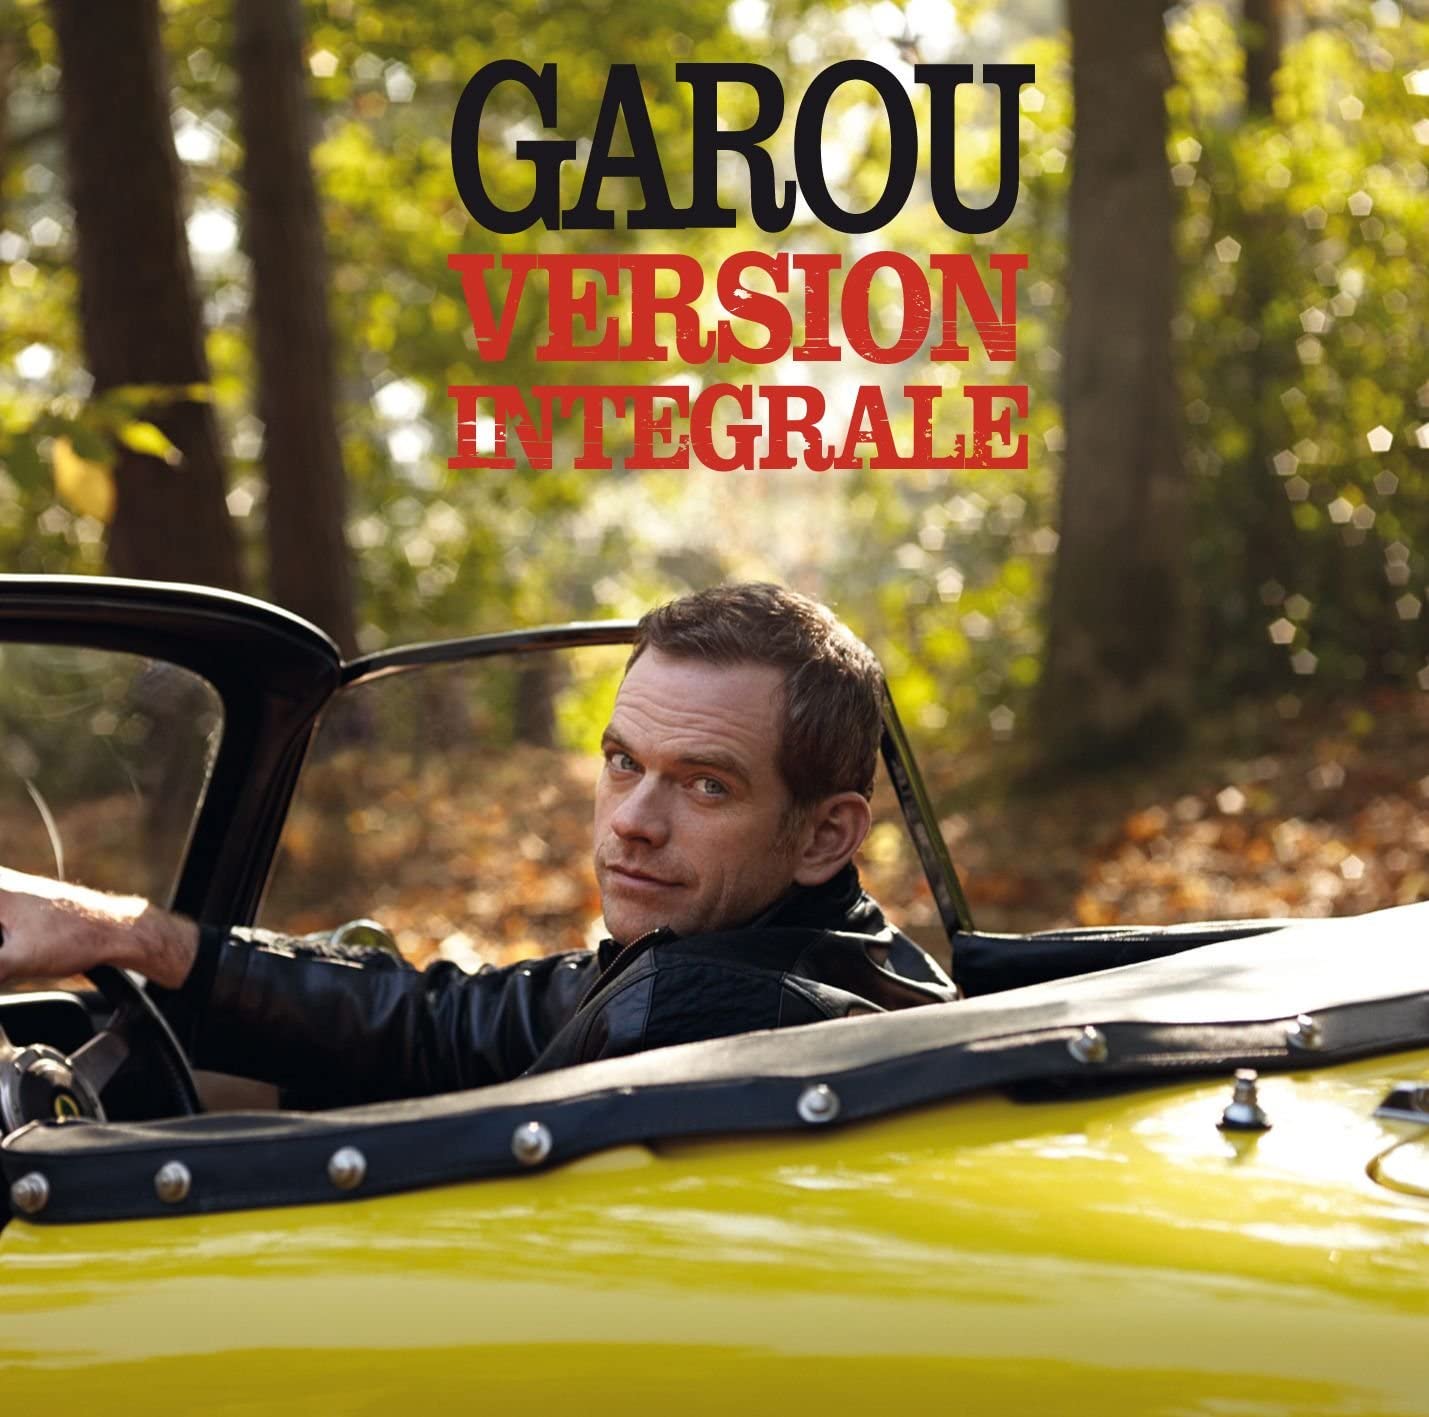 Version Integrale [Audio CD] Garou